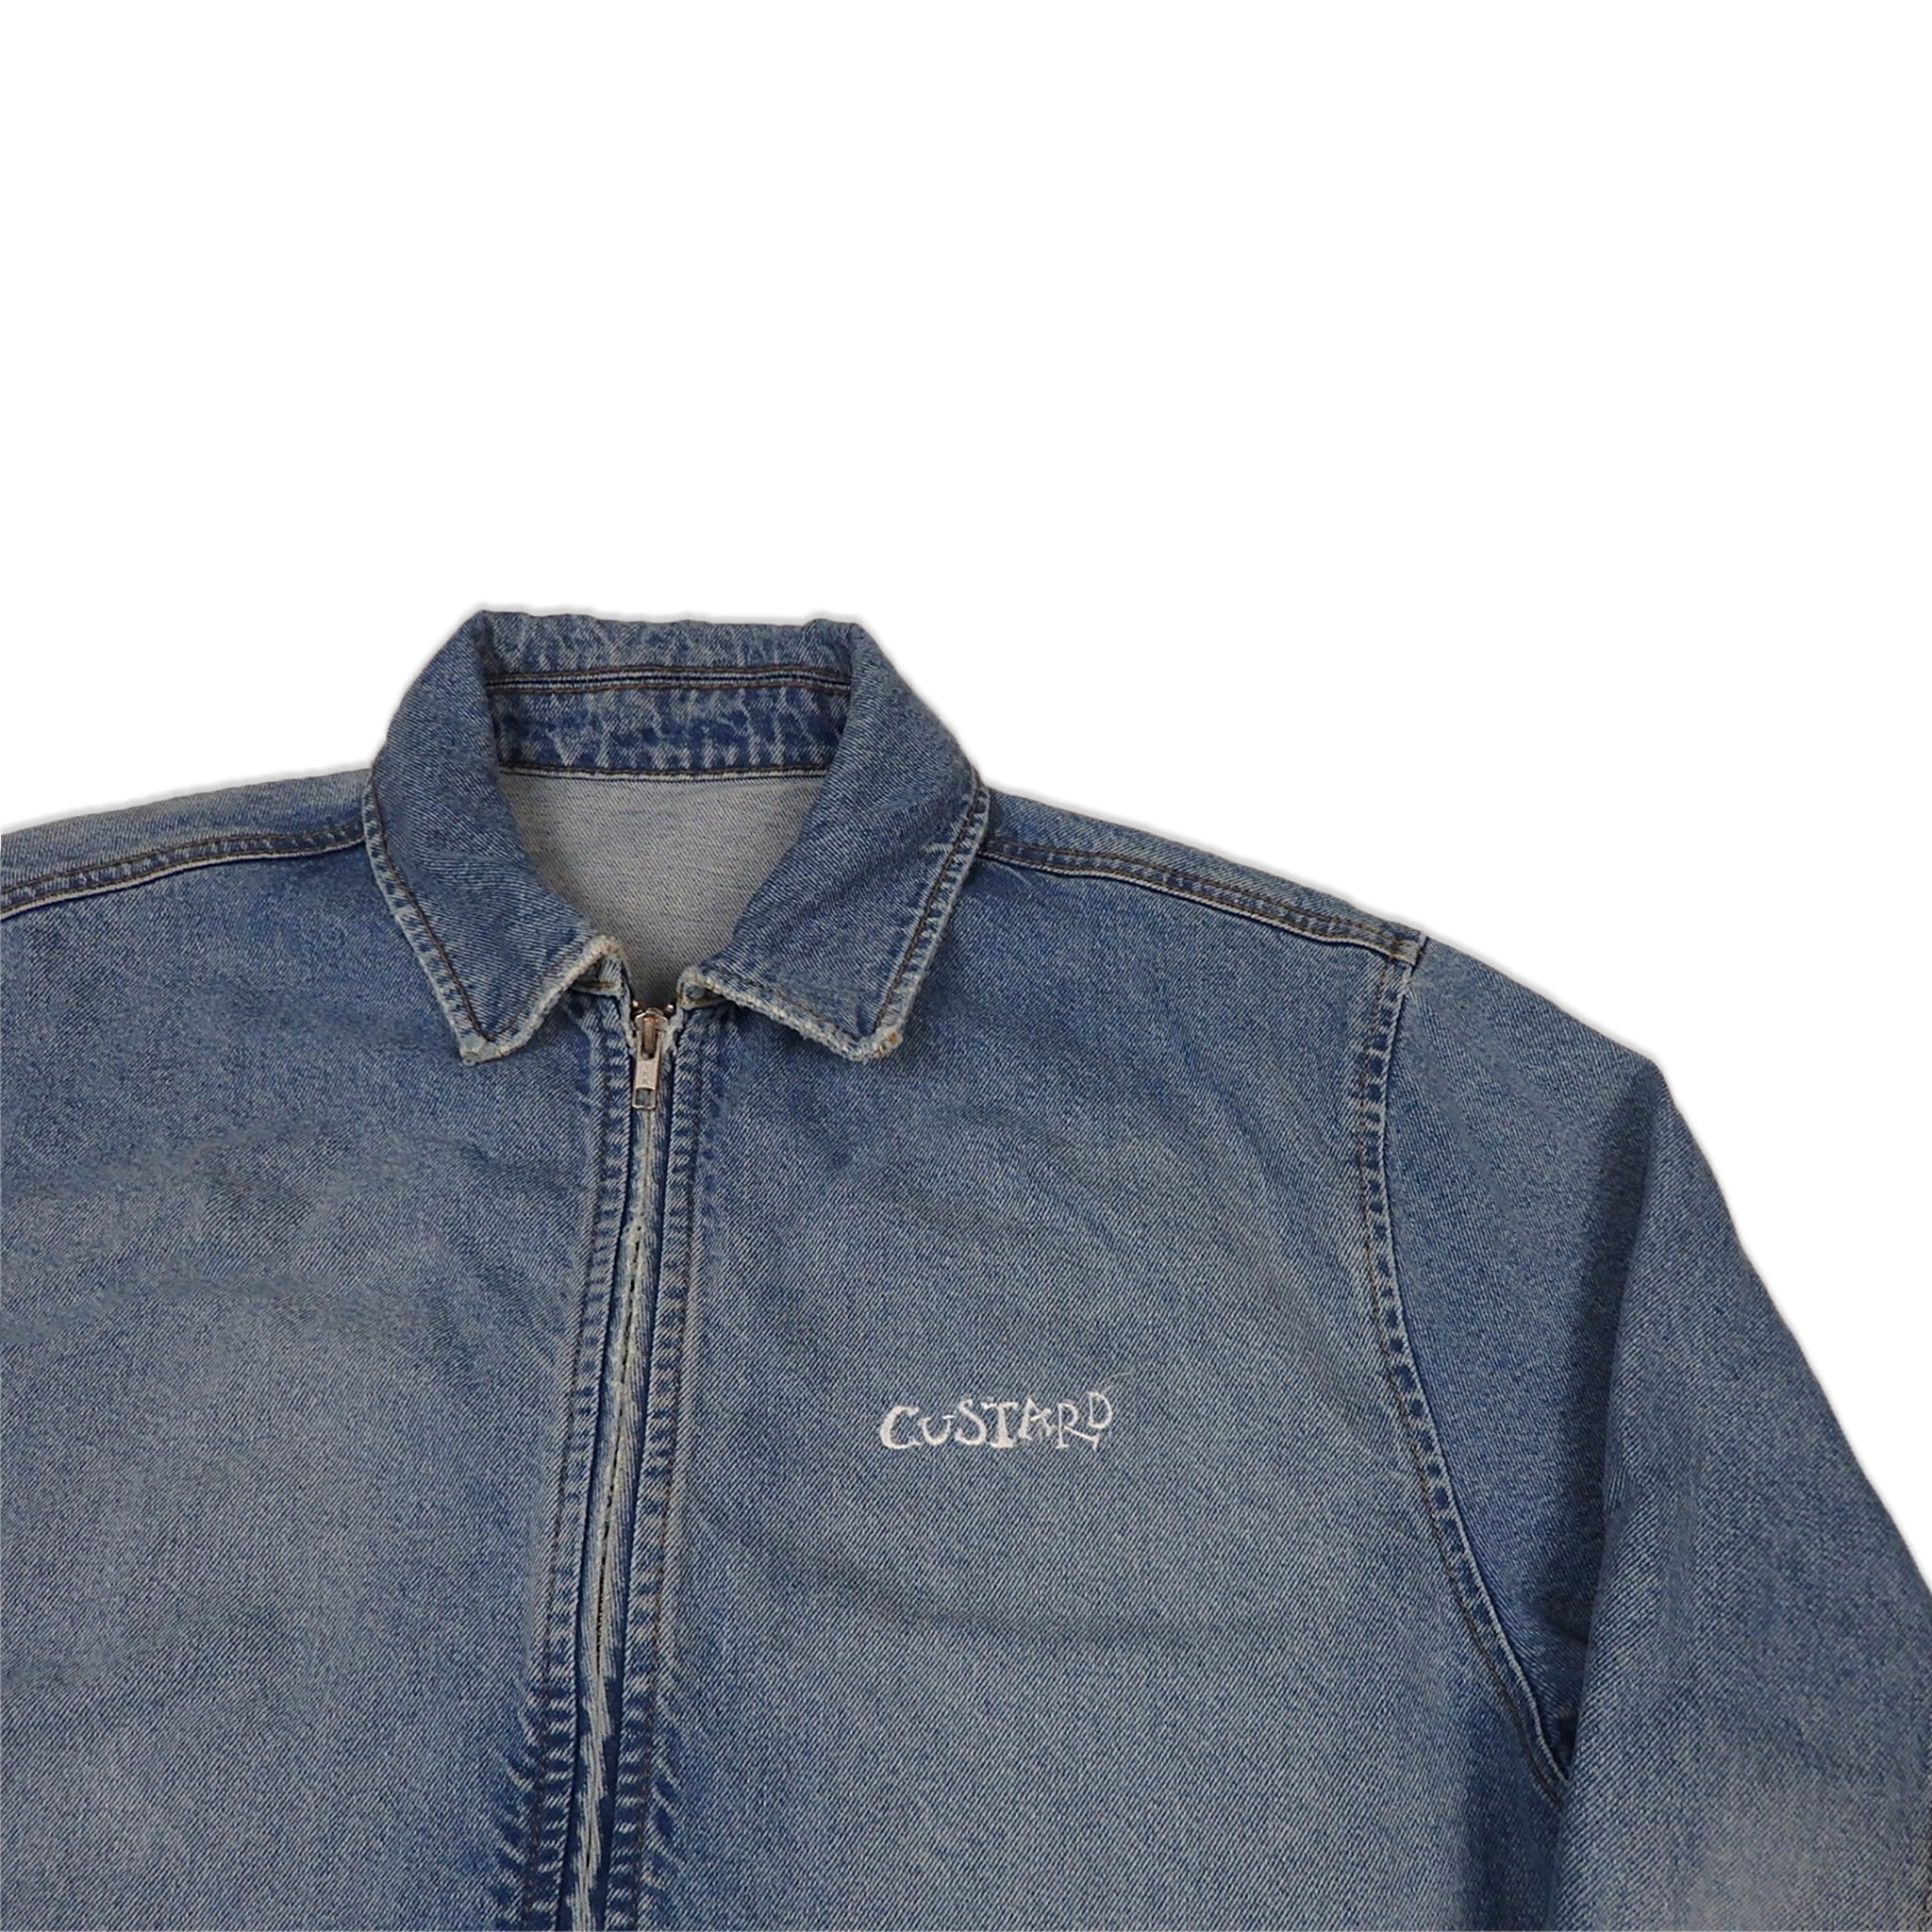 Custard Reclaimed Denim Jacket | Size Large